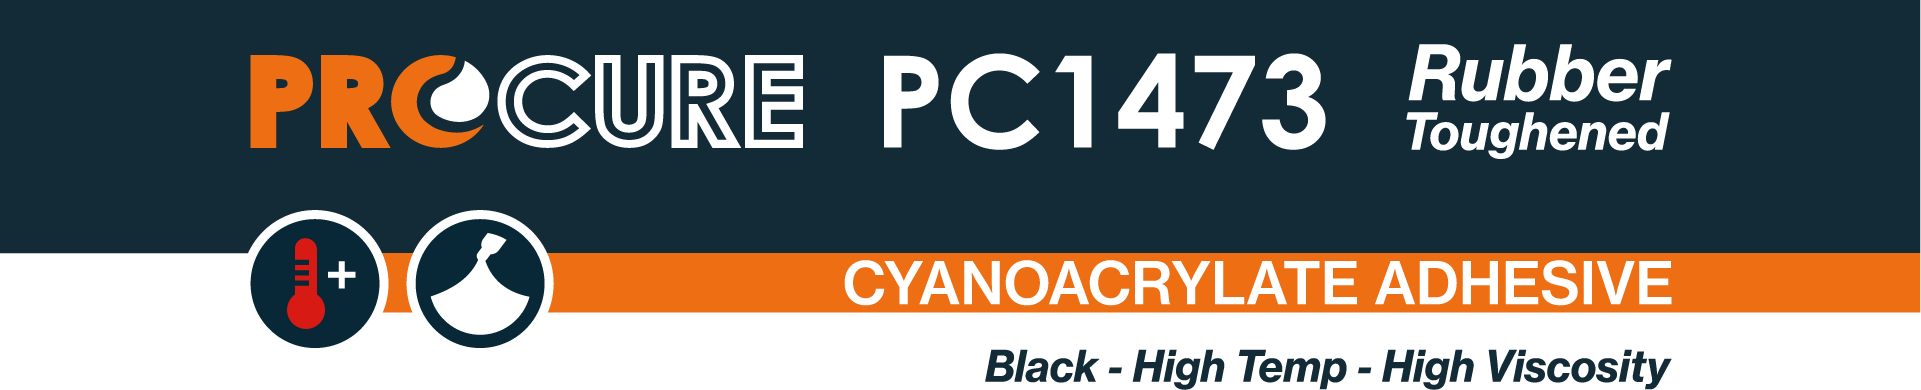 Procure PC1473 Black Rubber Toughened Cyanoacrylate Adhesive.